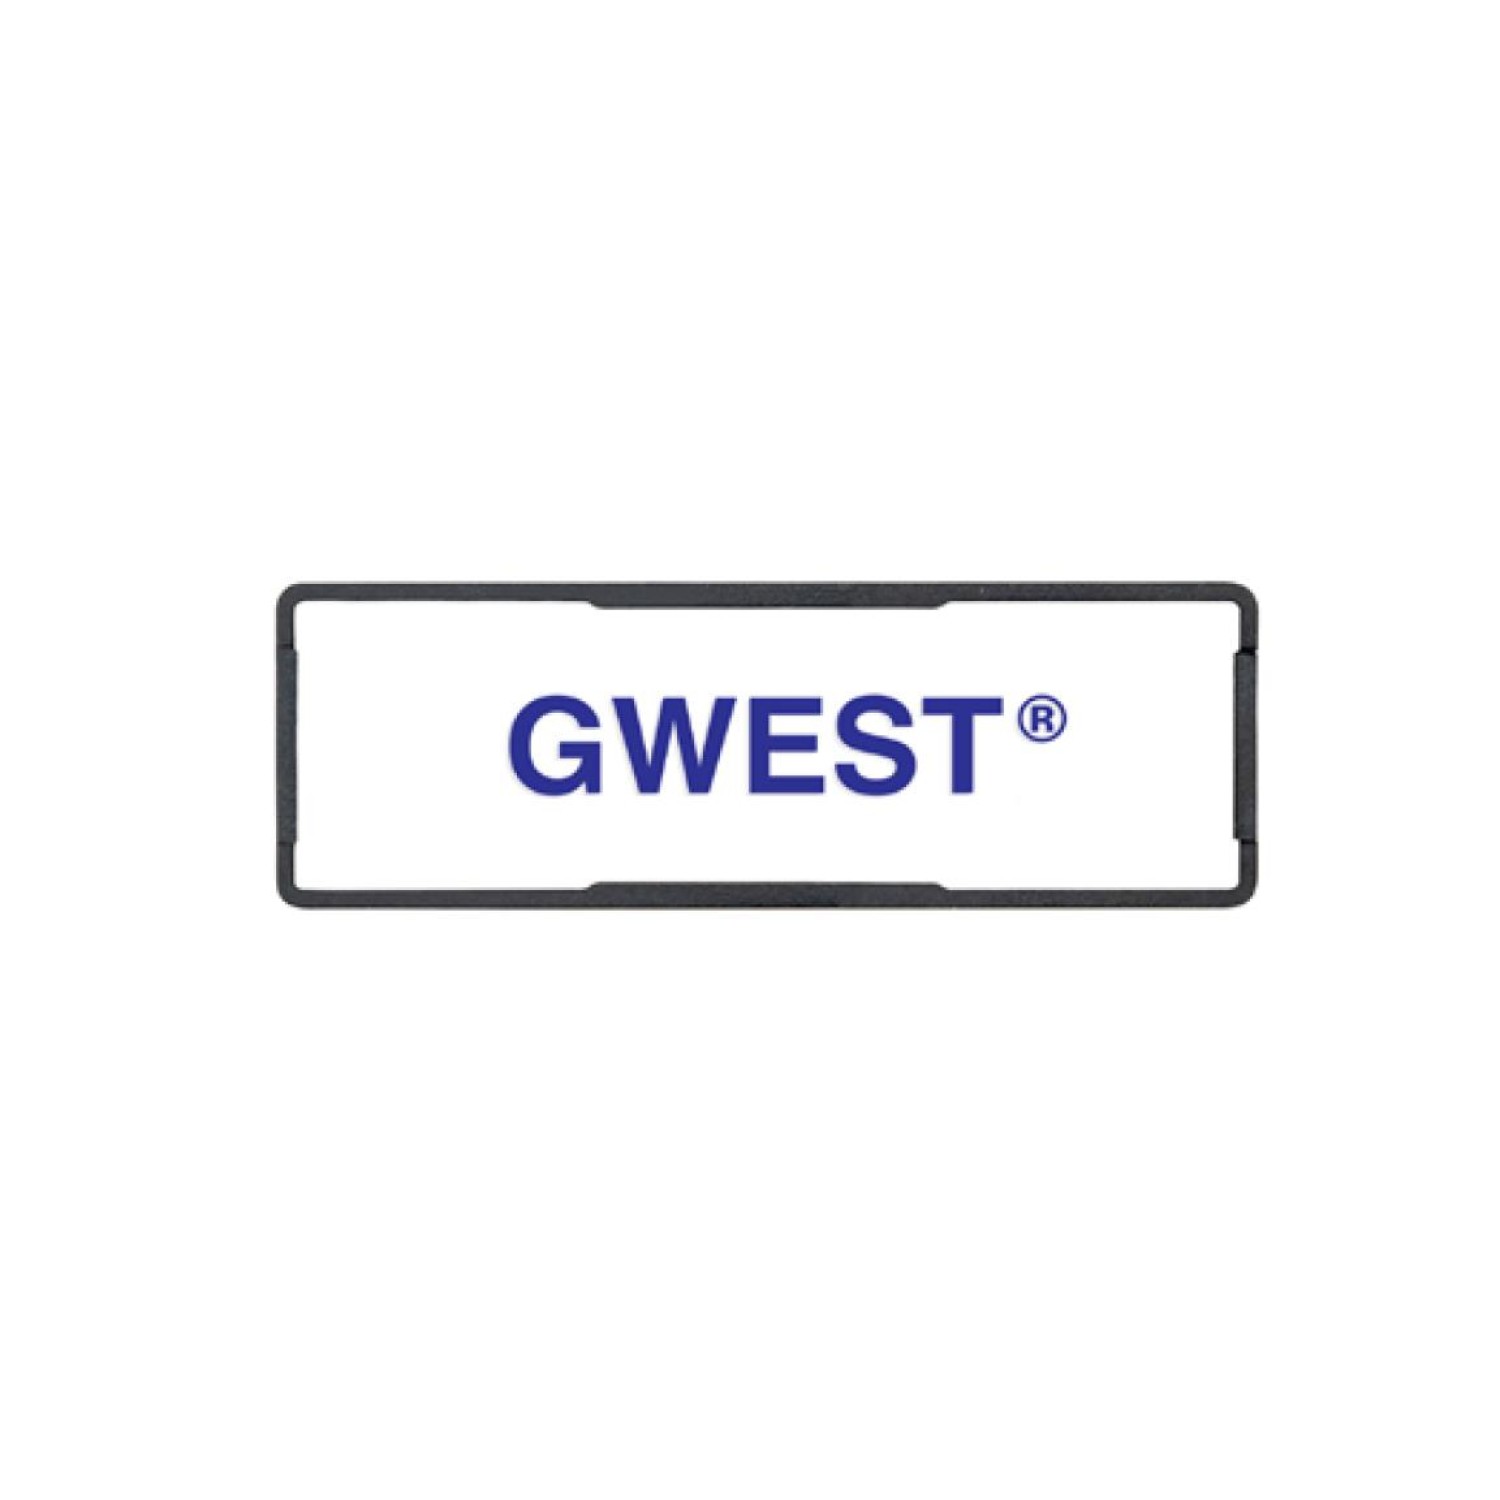 Gwest Pano Etiketi - GPET 1 - 25 Adet